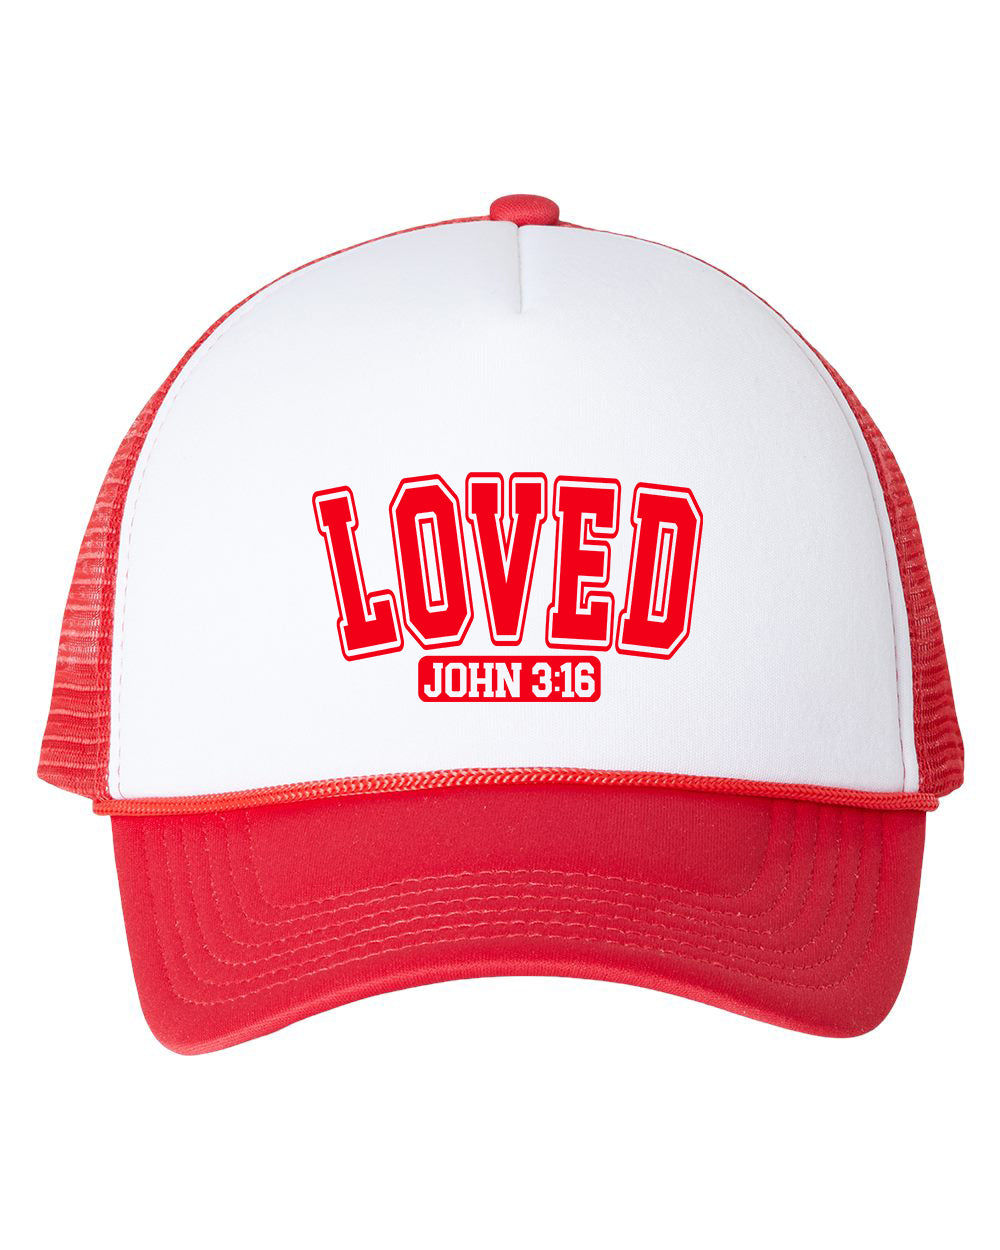 Loved John 3:16 Retro Cap Trucker Hat